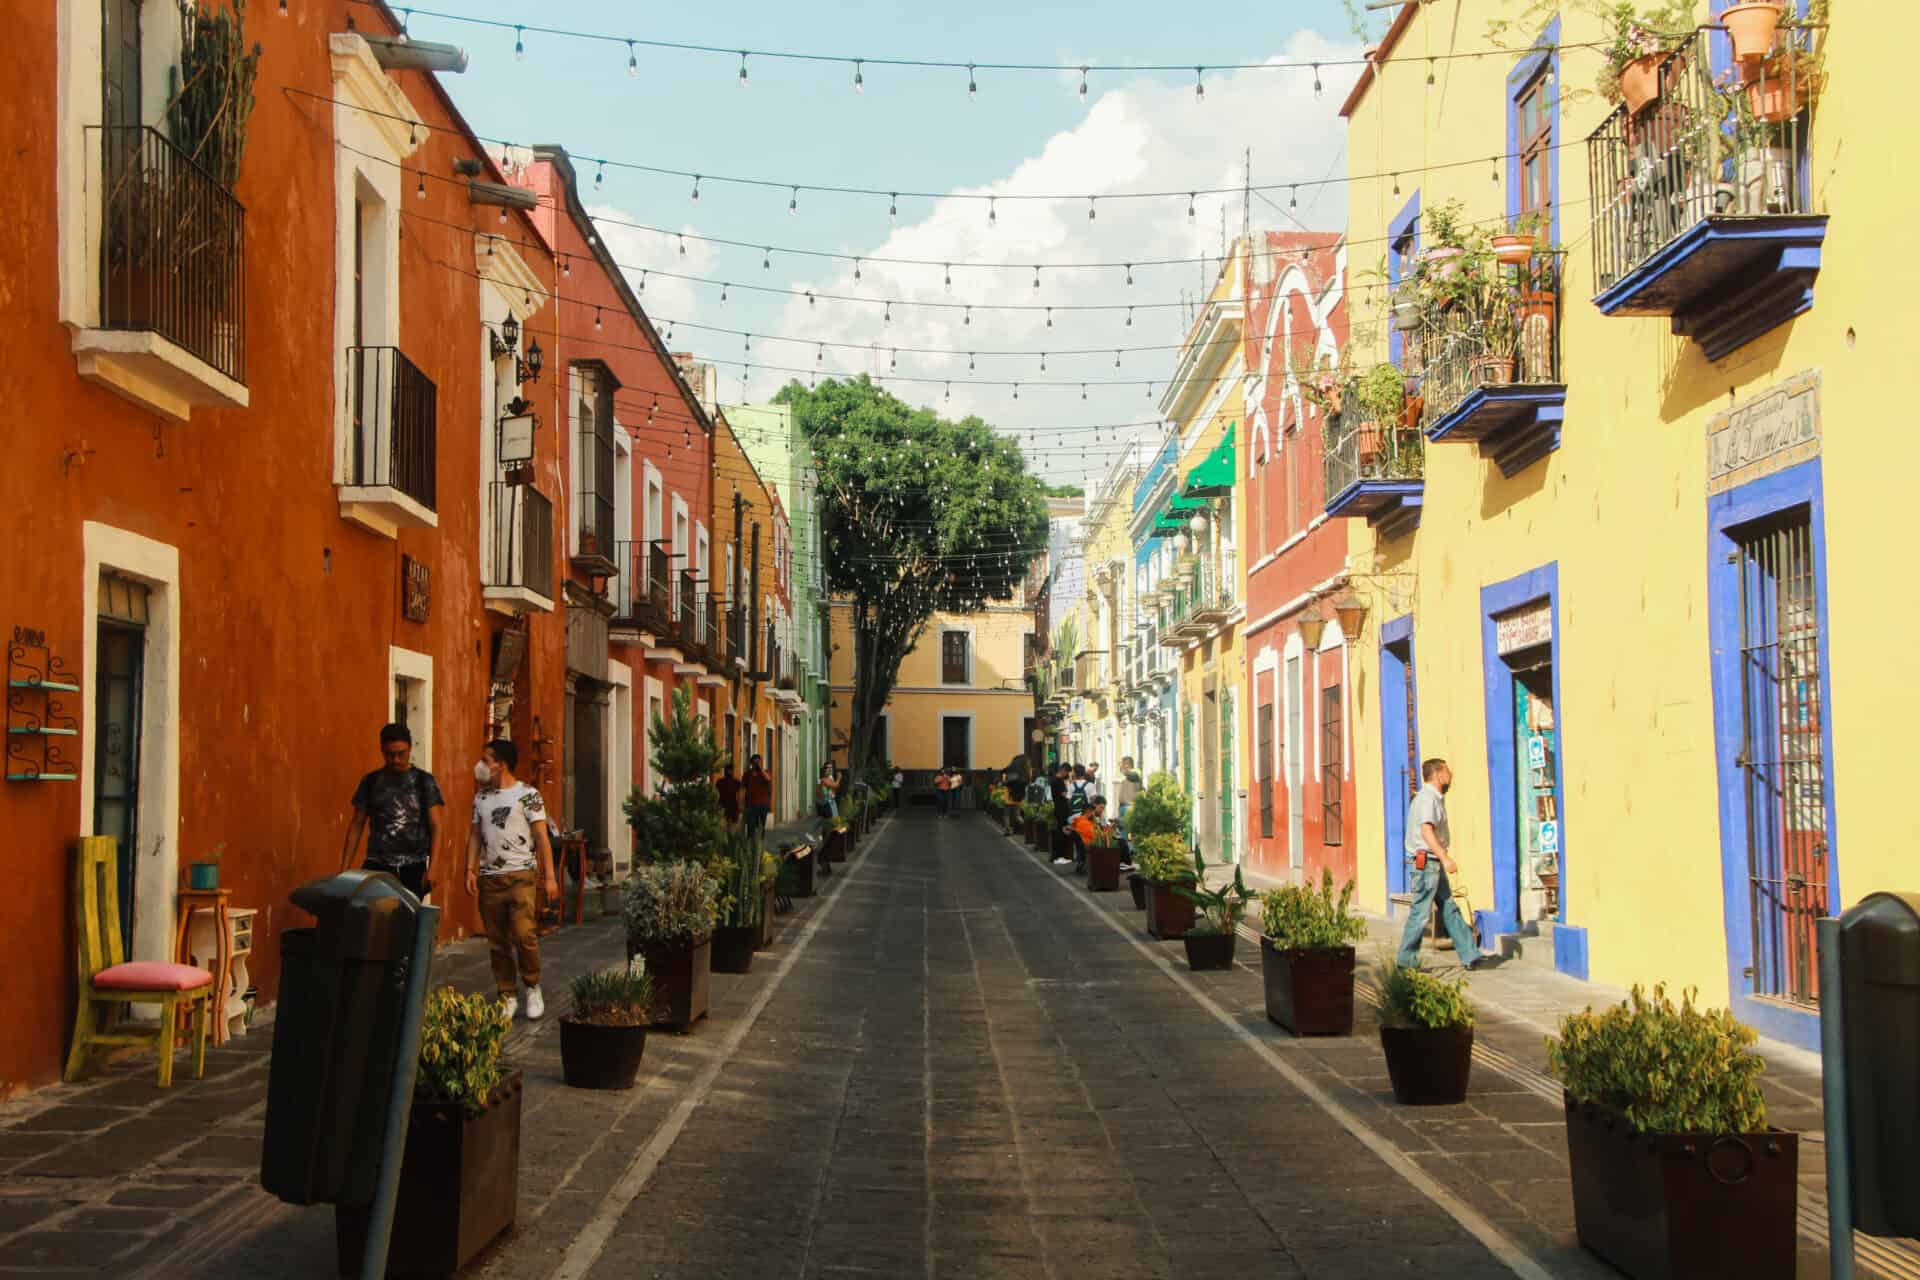 Iconic Callejon de los Sapos tourist street in Puebla